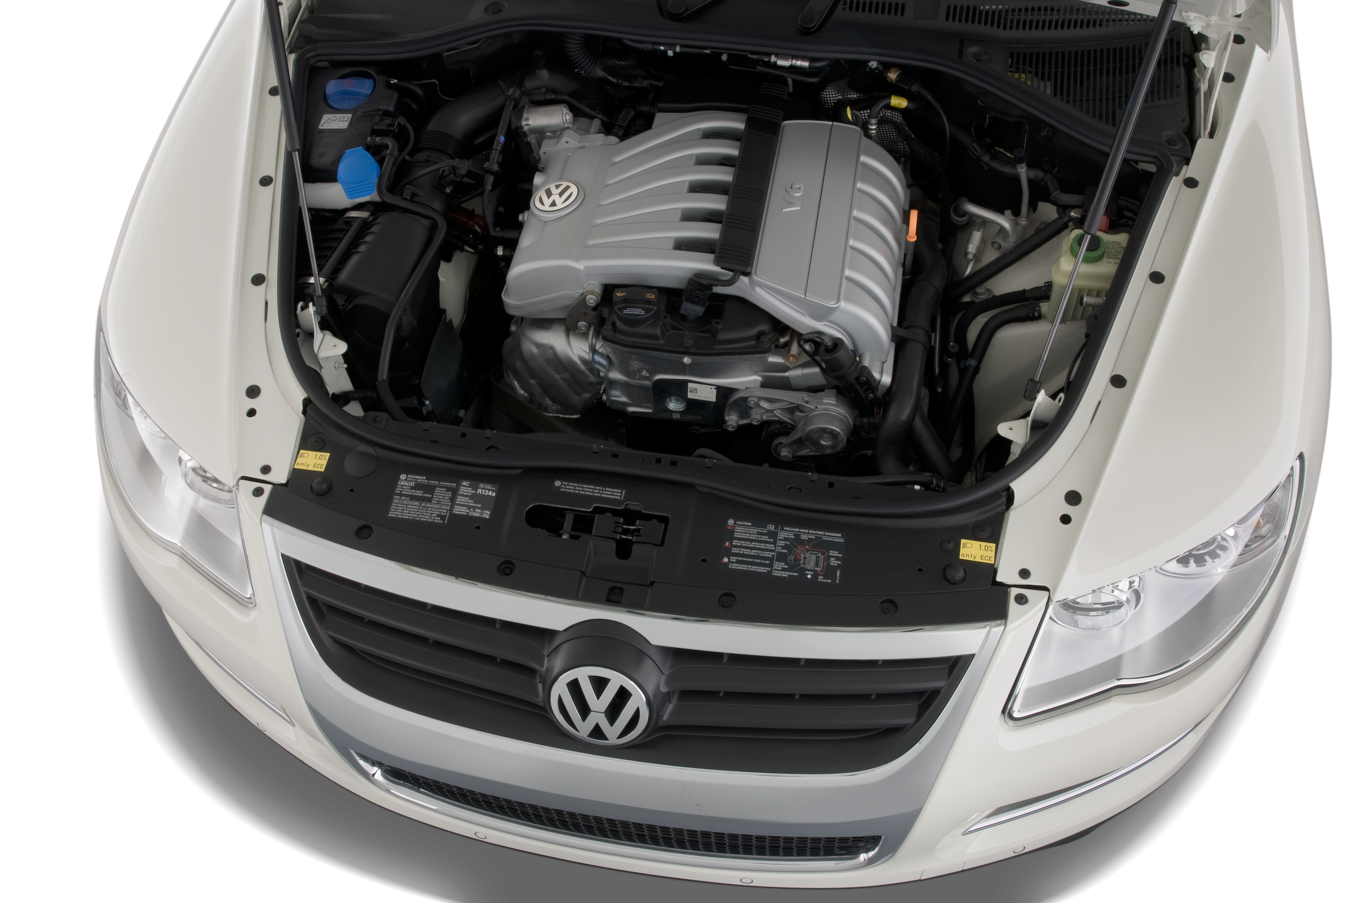 Volkswagen Touareg 2012 двигатель. Двигатель 3 6 Фольксваген Туарег. Туарег 3.2 под капотом. Фольксваген Туарег 2006 двигатель. Туарег под капотом